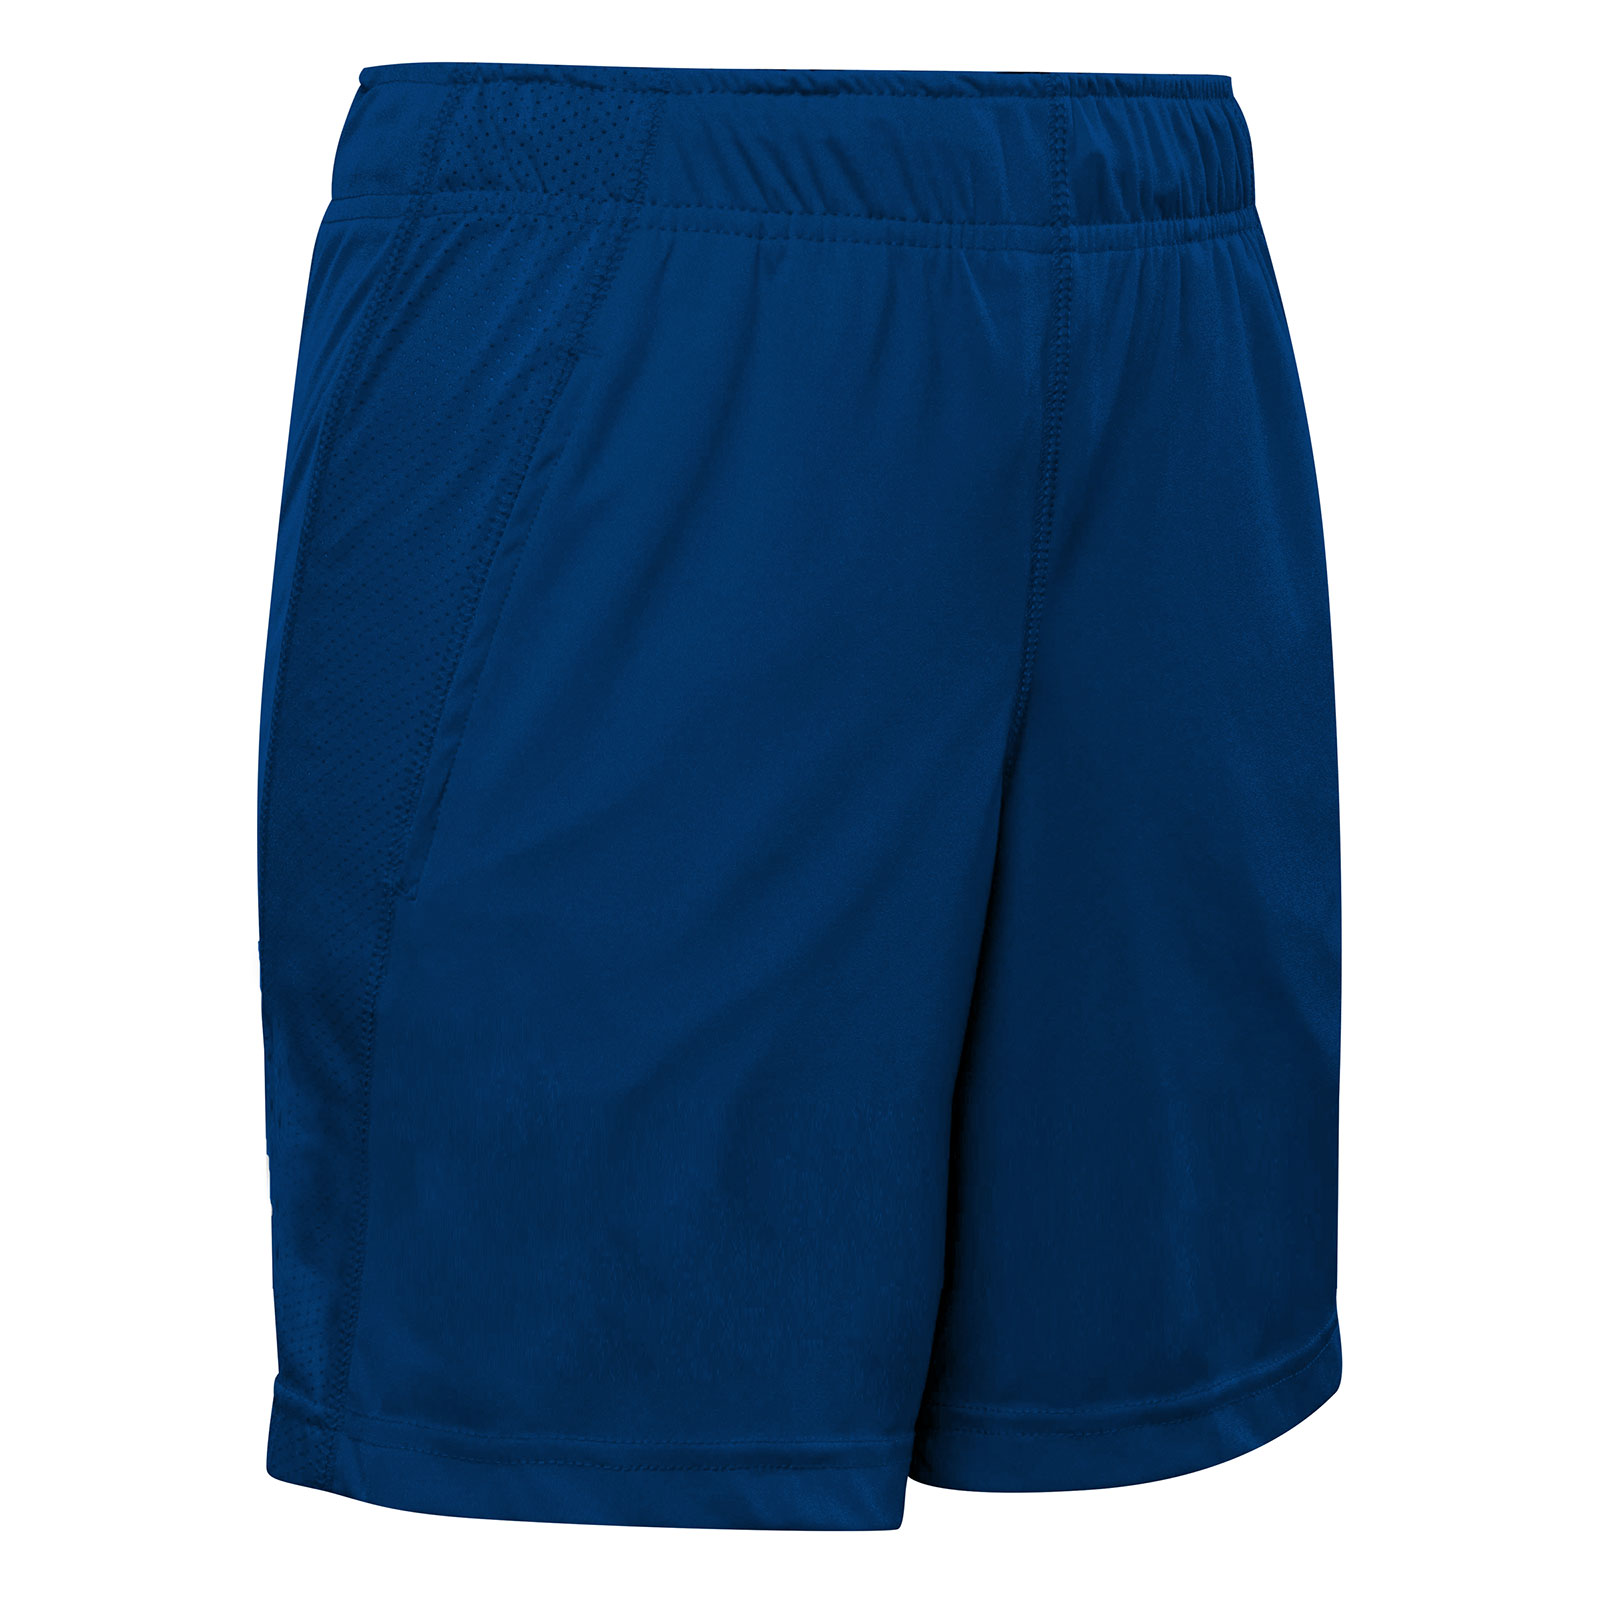 soccer-apparel-women's-shorts-stock-women's-shorts